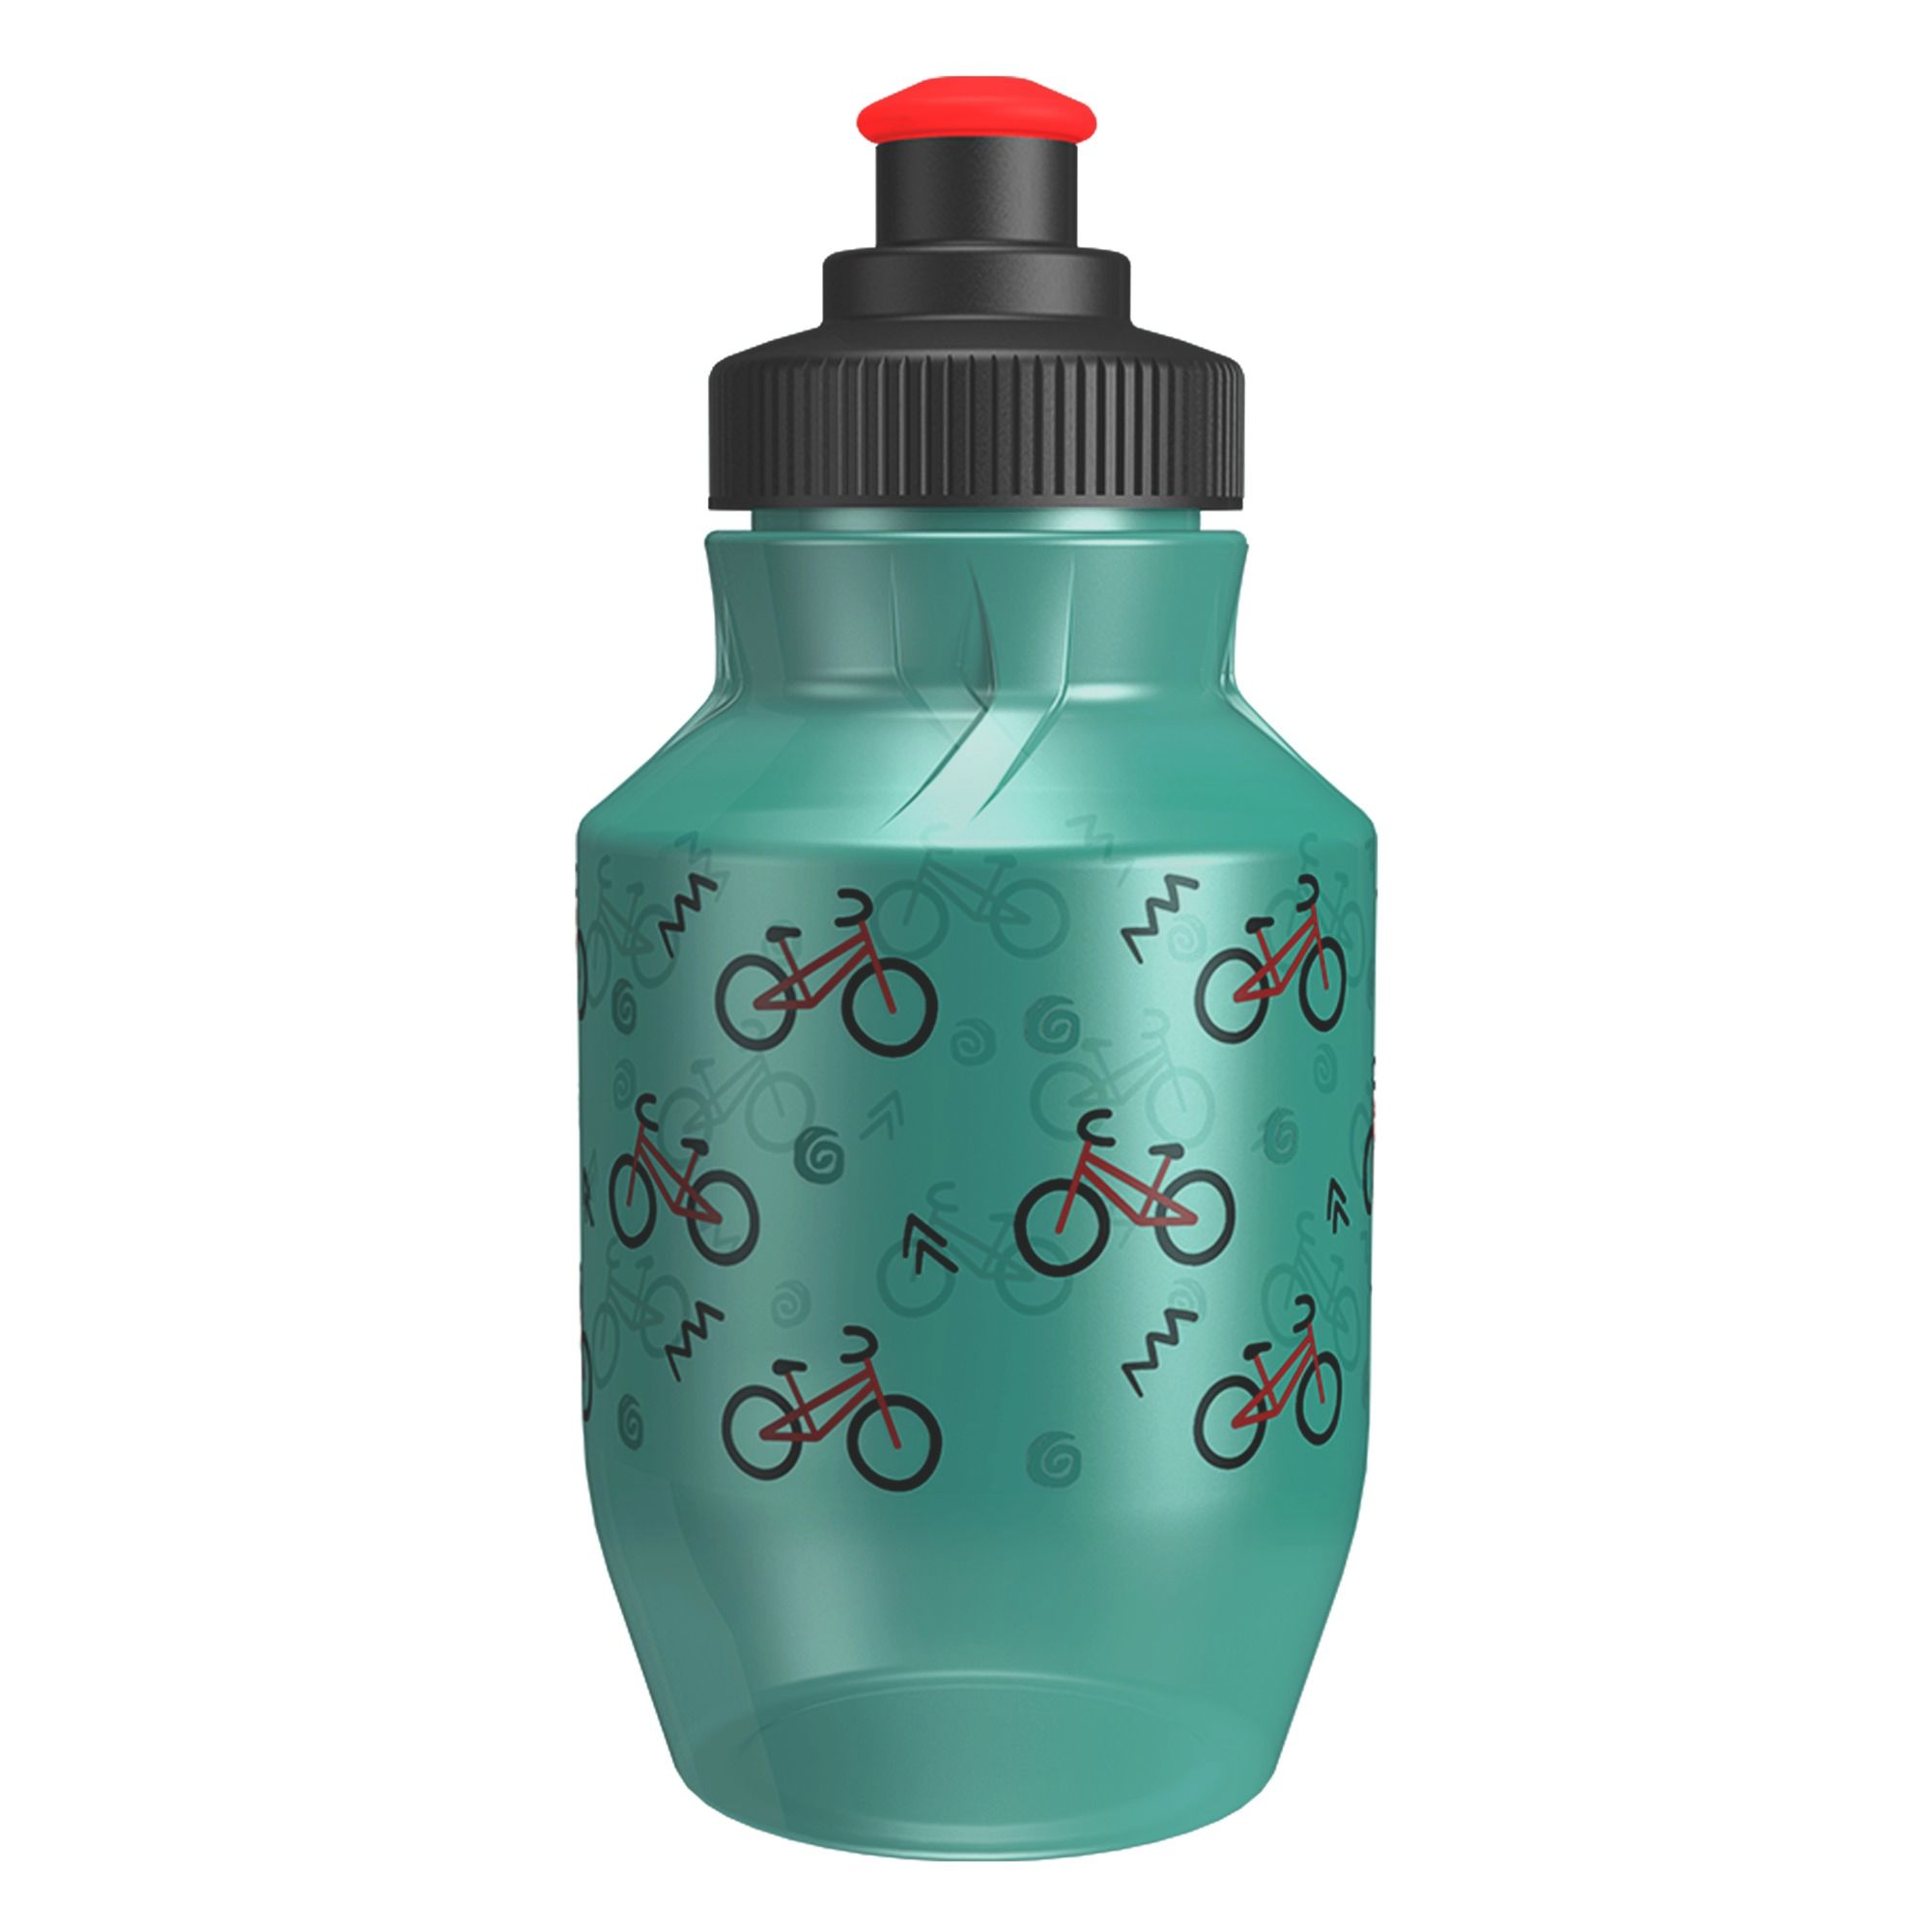 Kids-handlebar-mounted-water-bottle-and-cage-kit